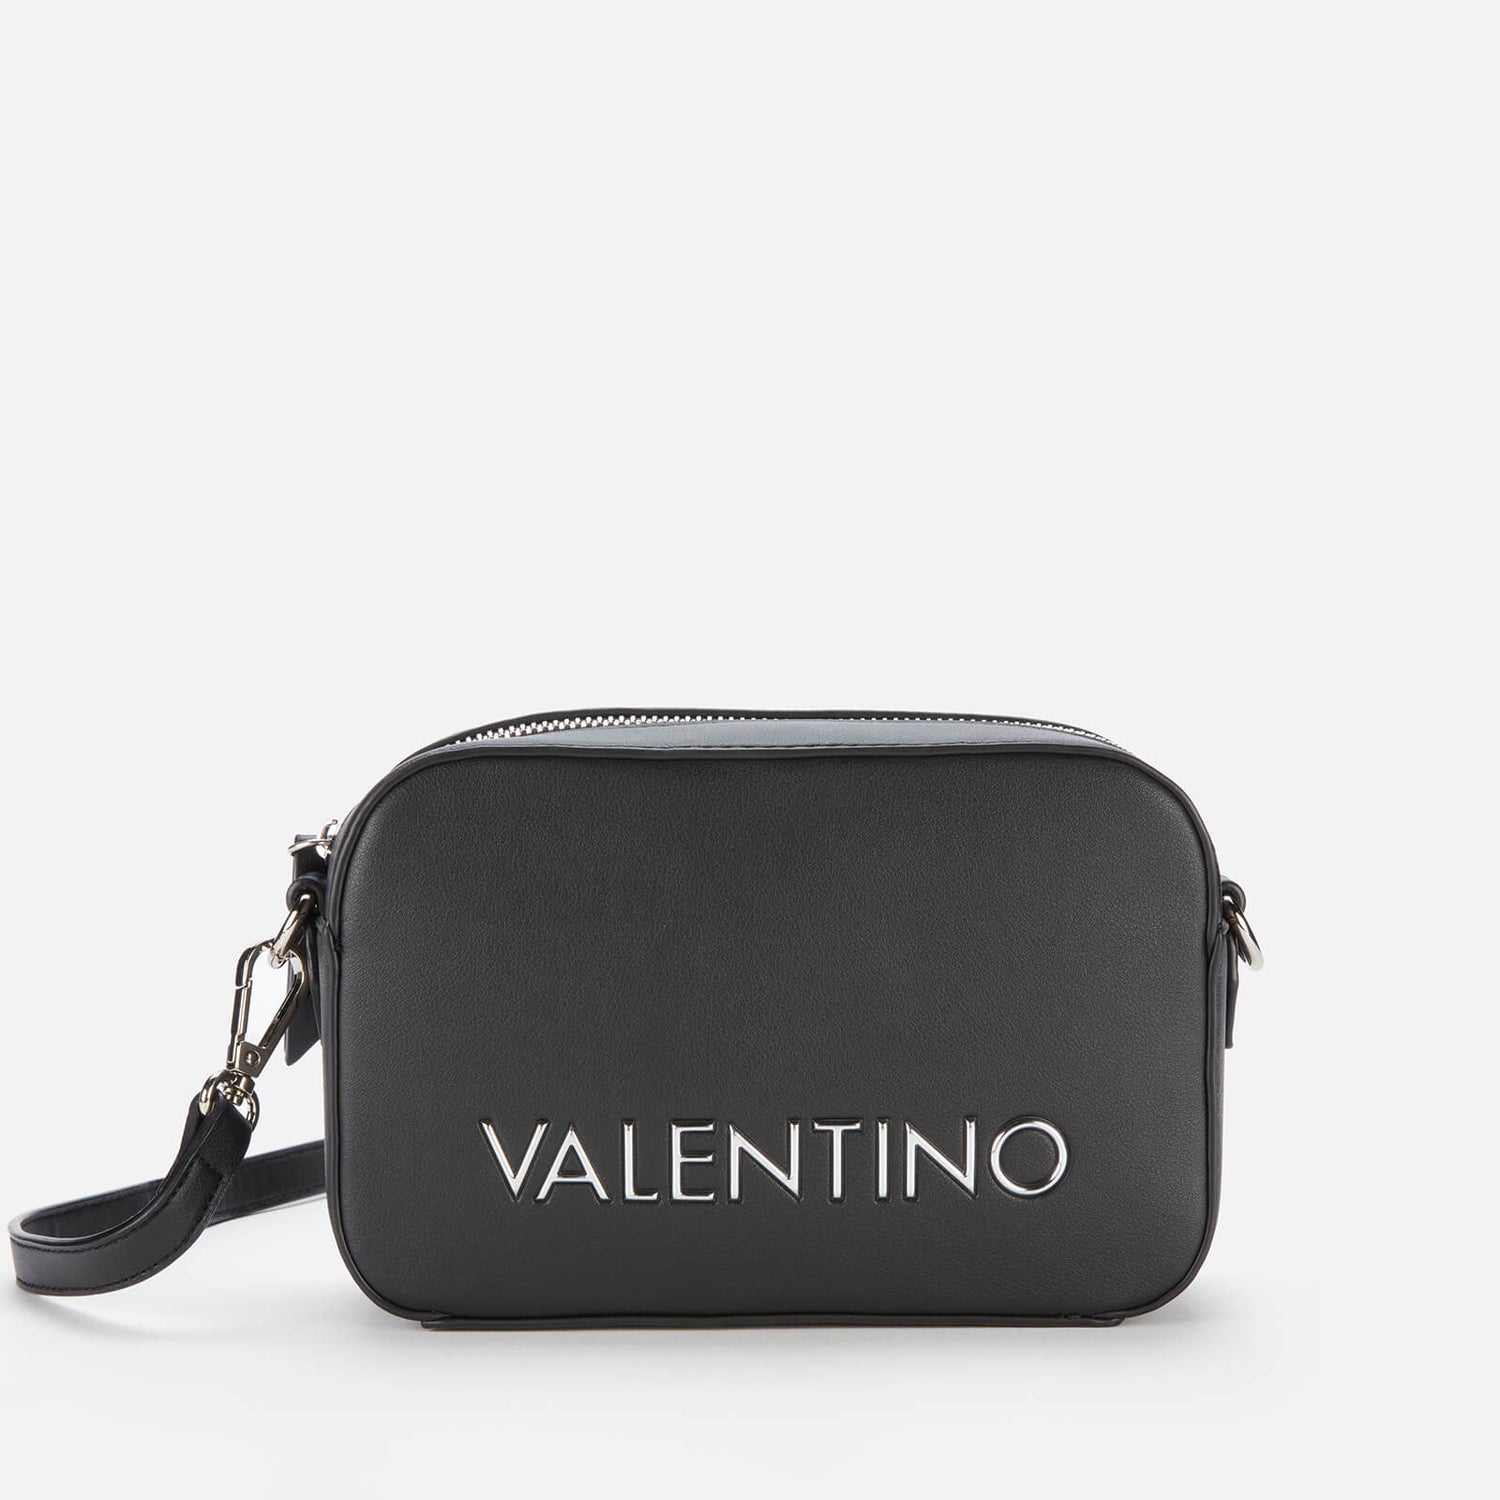 Valentino Bags Women's Olive Camera Bag - Nero